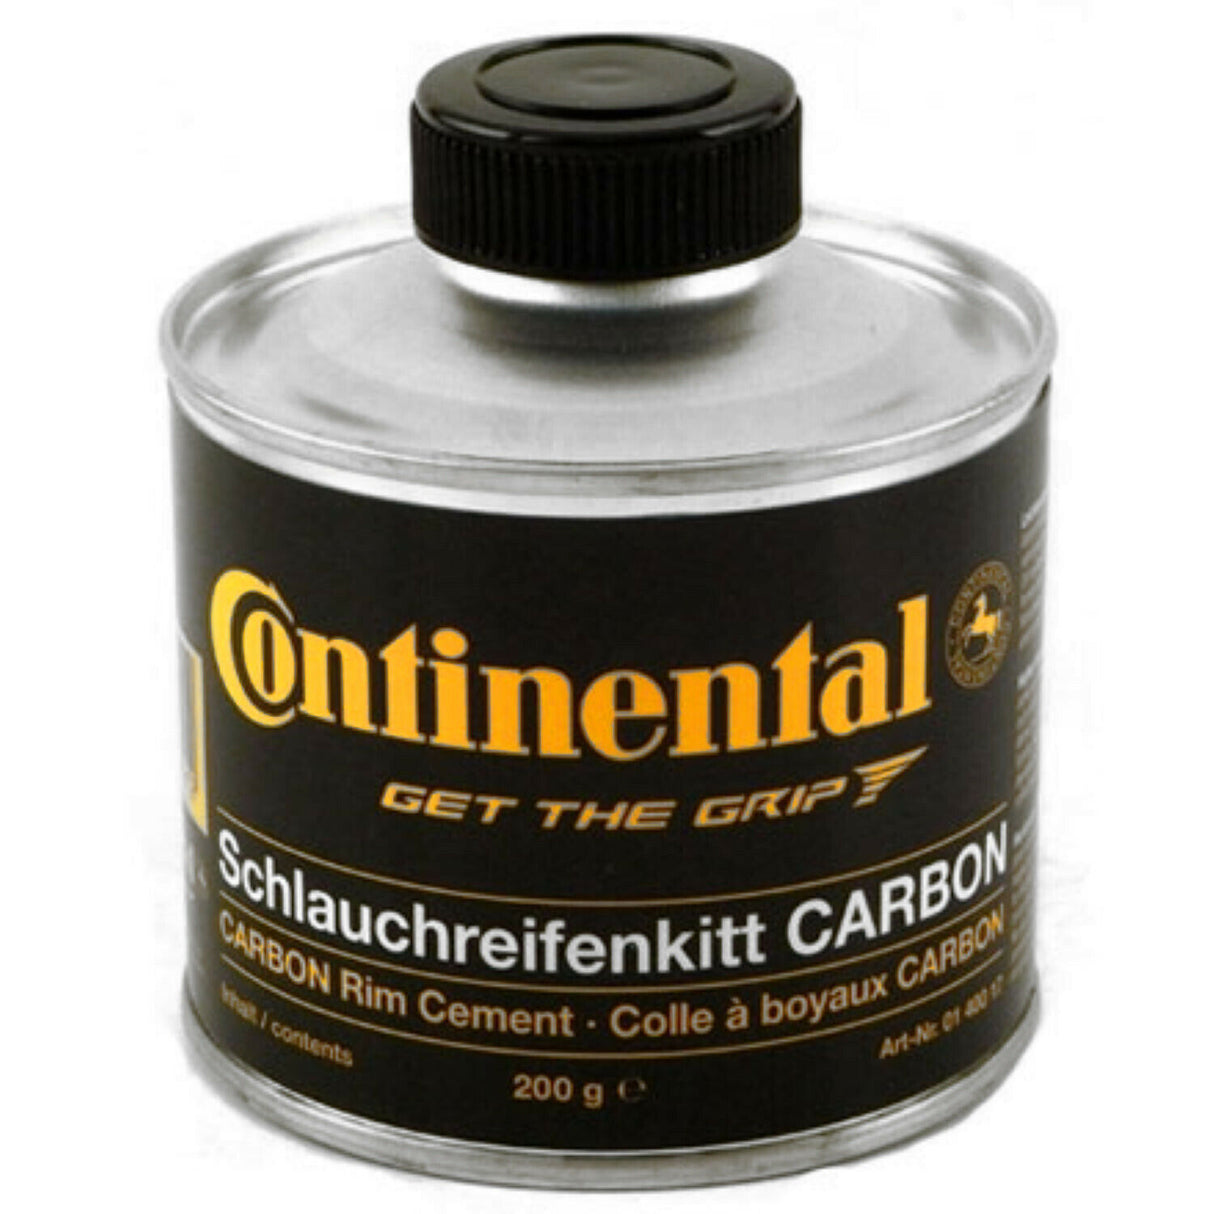 Continental Tin of Tubular Cement / Glue for Carbon Rims - 200g - Sportandleisure.com (6968004182170)